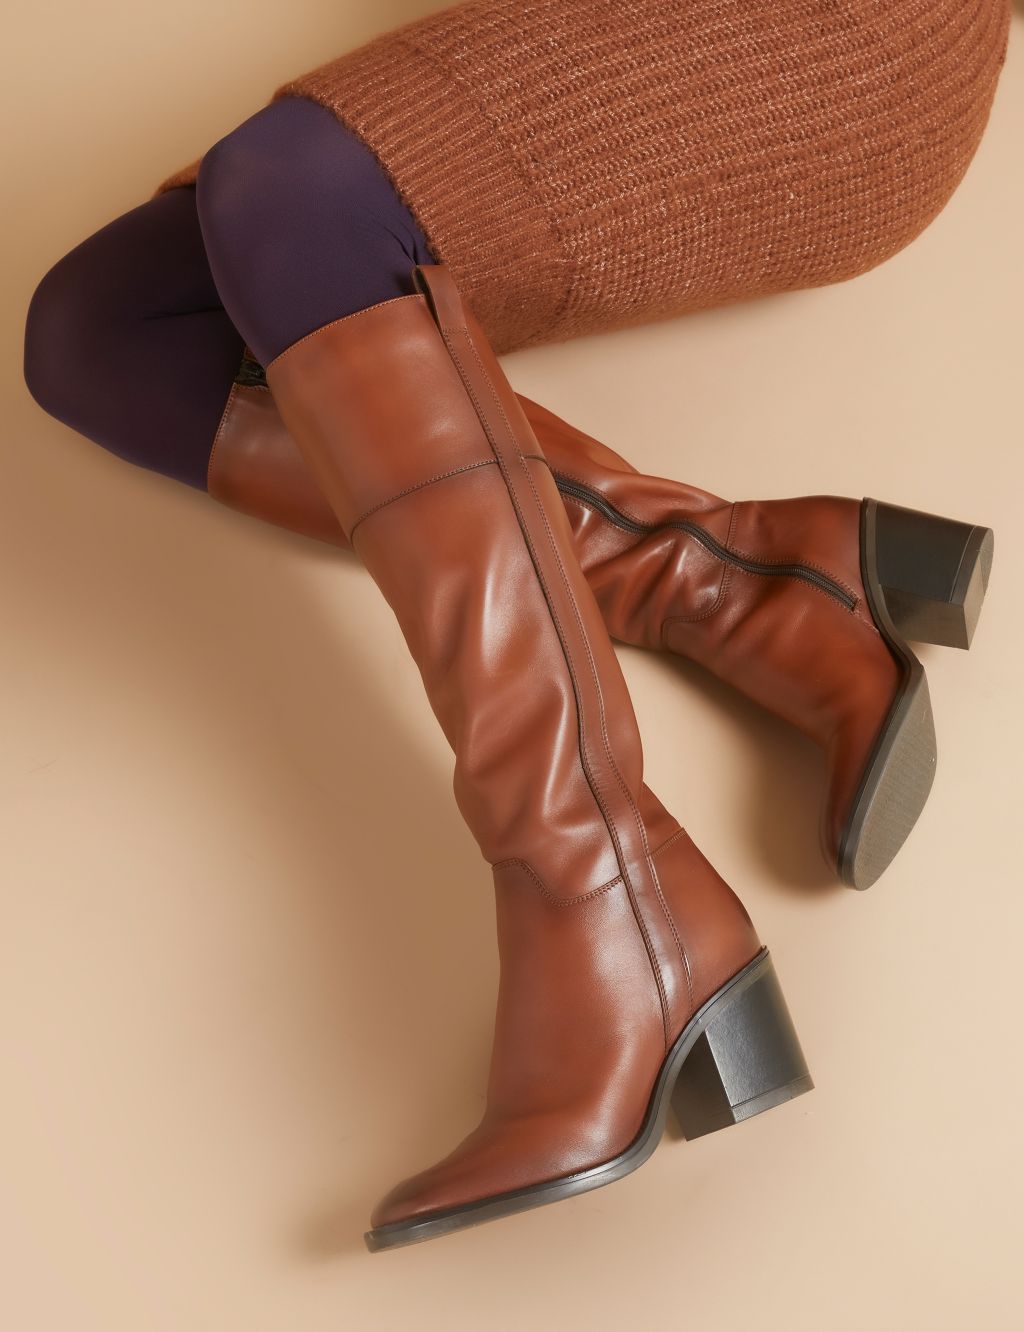 Leather Block Heel Knee High Boots